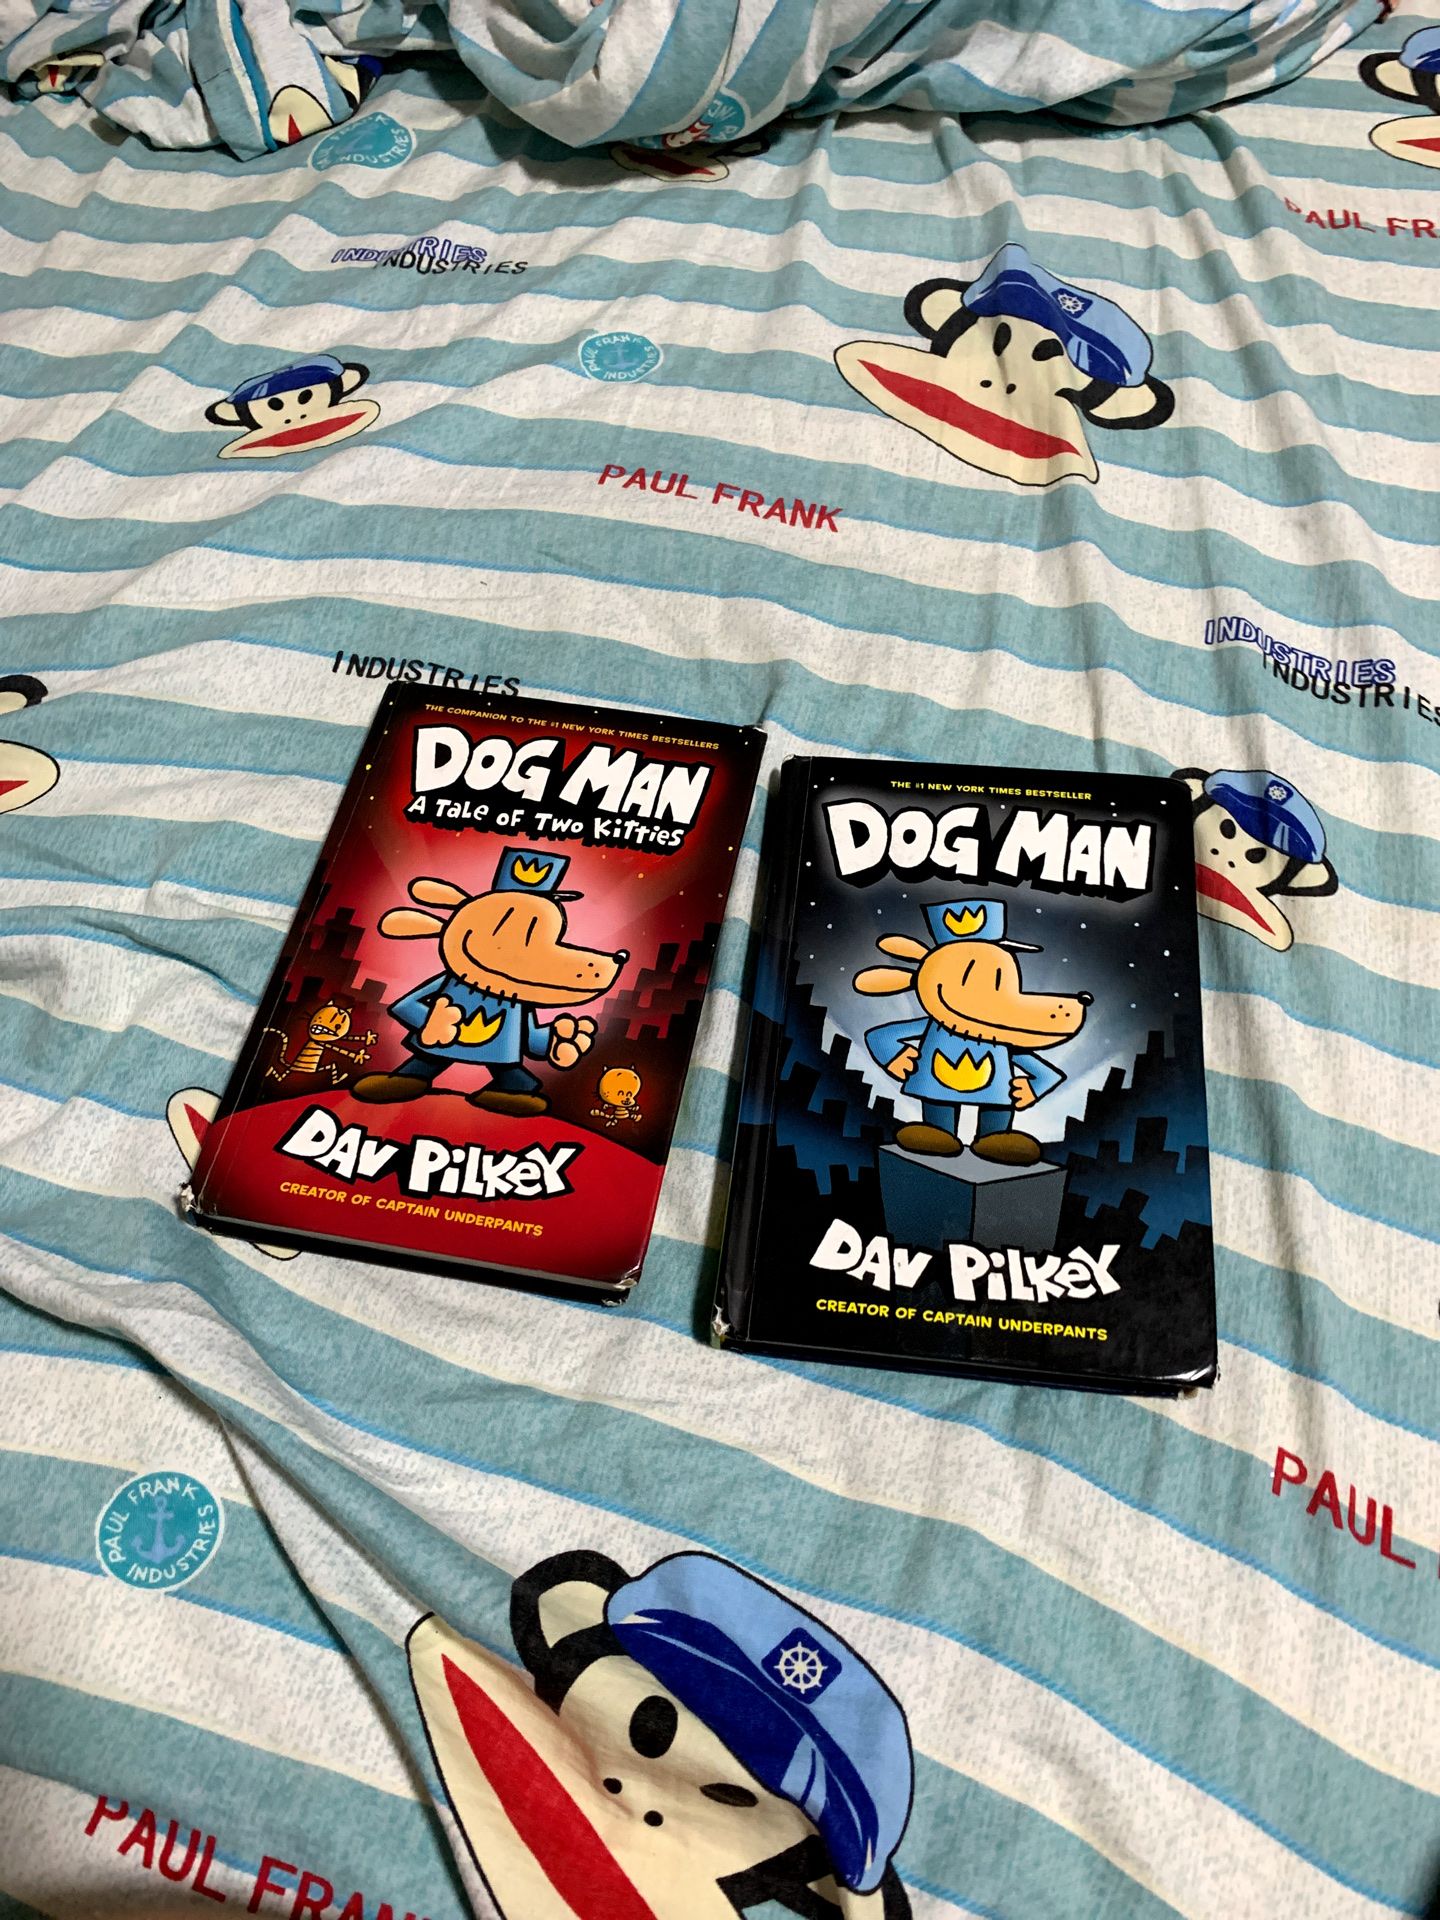 Dog man book 1 and book 3